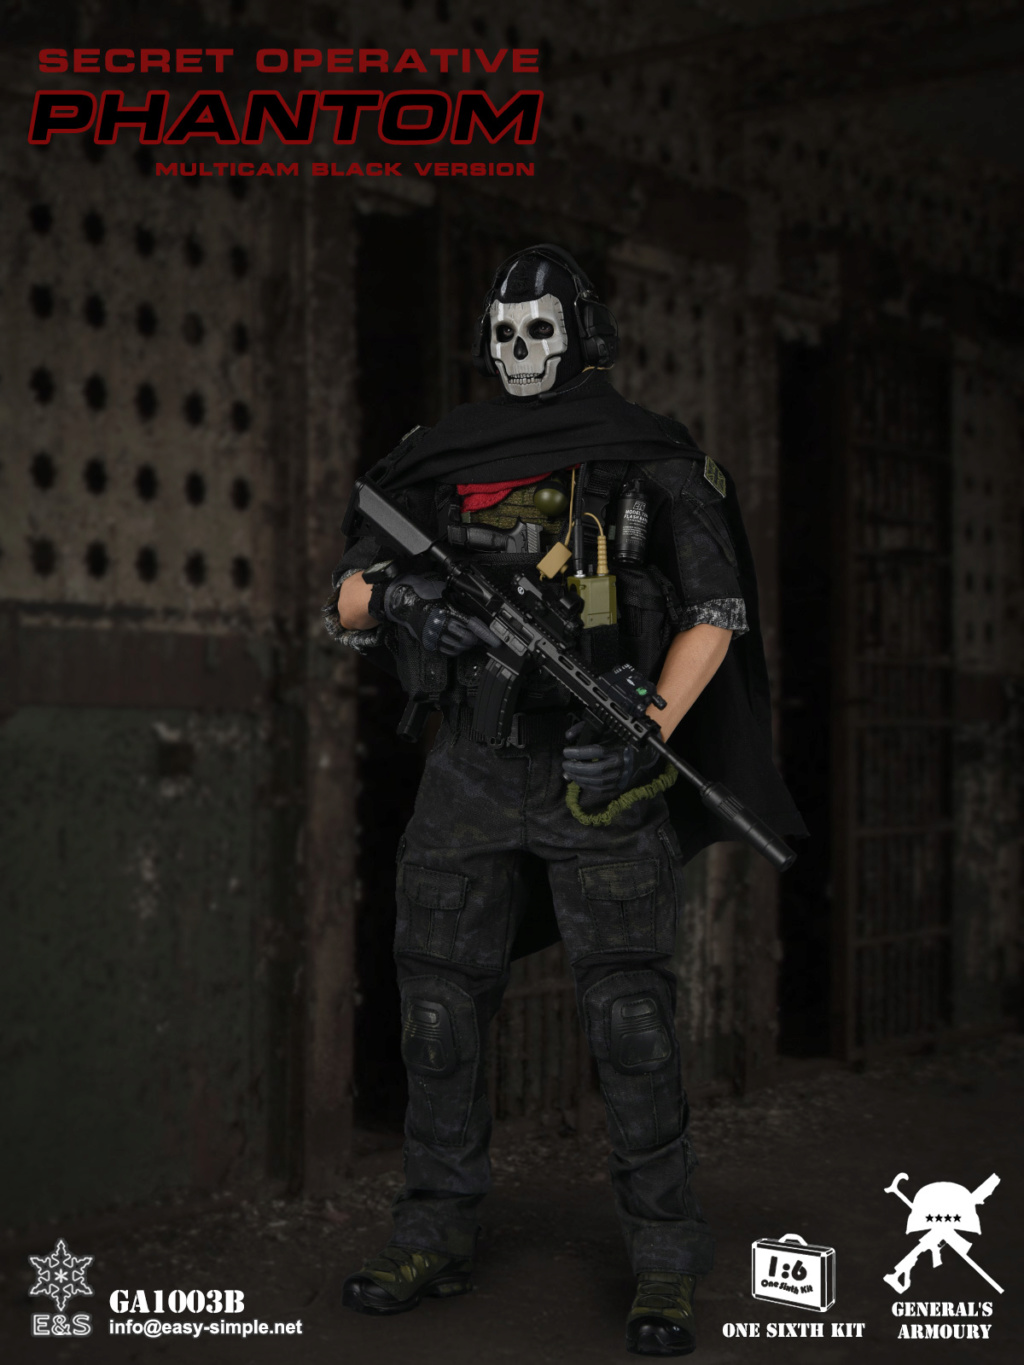 videogame-based - NEW PRODUCT: General's Armoury: GA1003B Secret Operative Phantom (Multicam Black) Limited 200 Units Worldwide 10936510